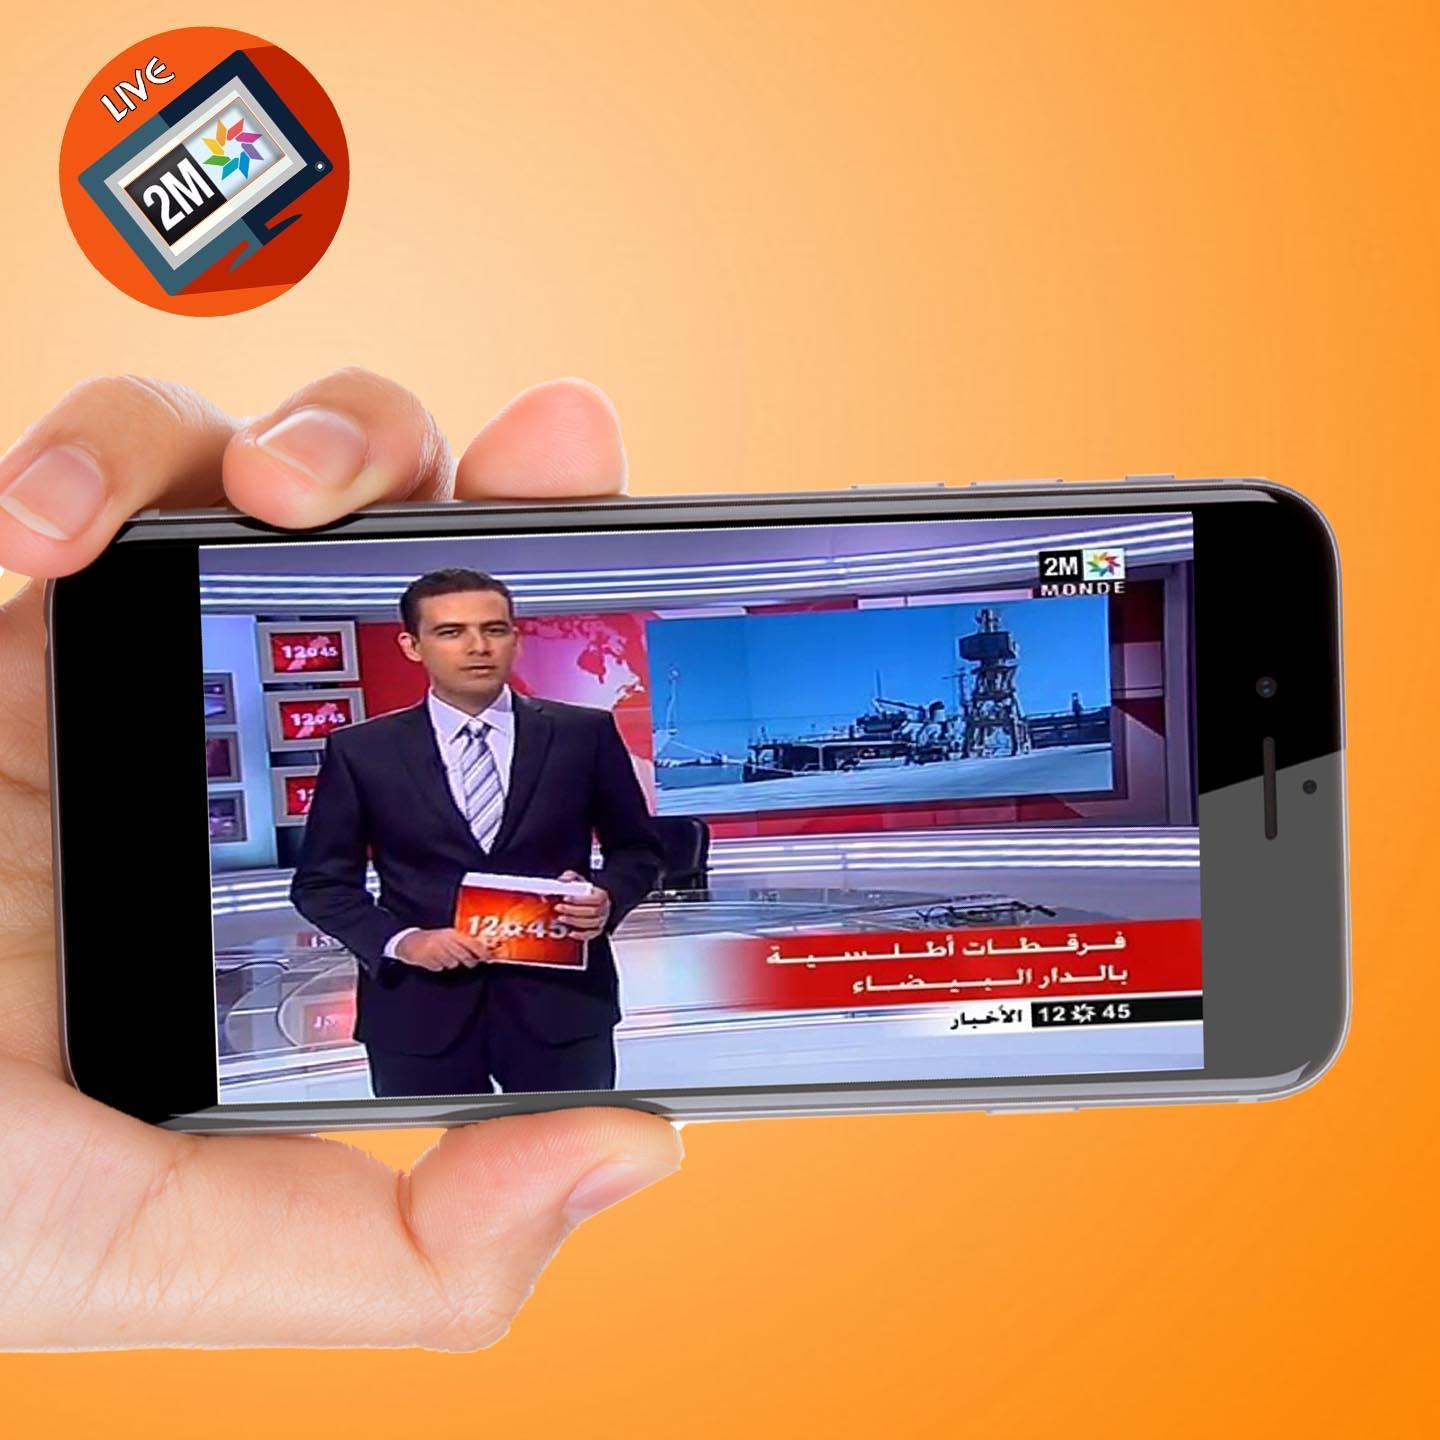 2M Tv Maroc live en direct for Android - APK Download